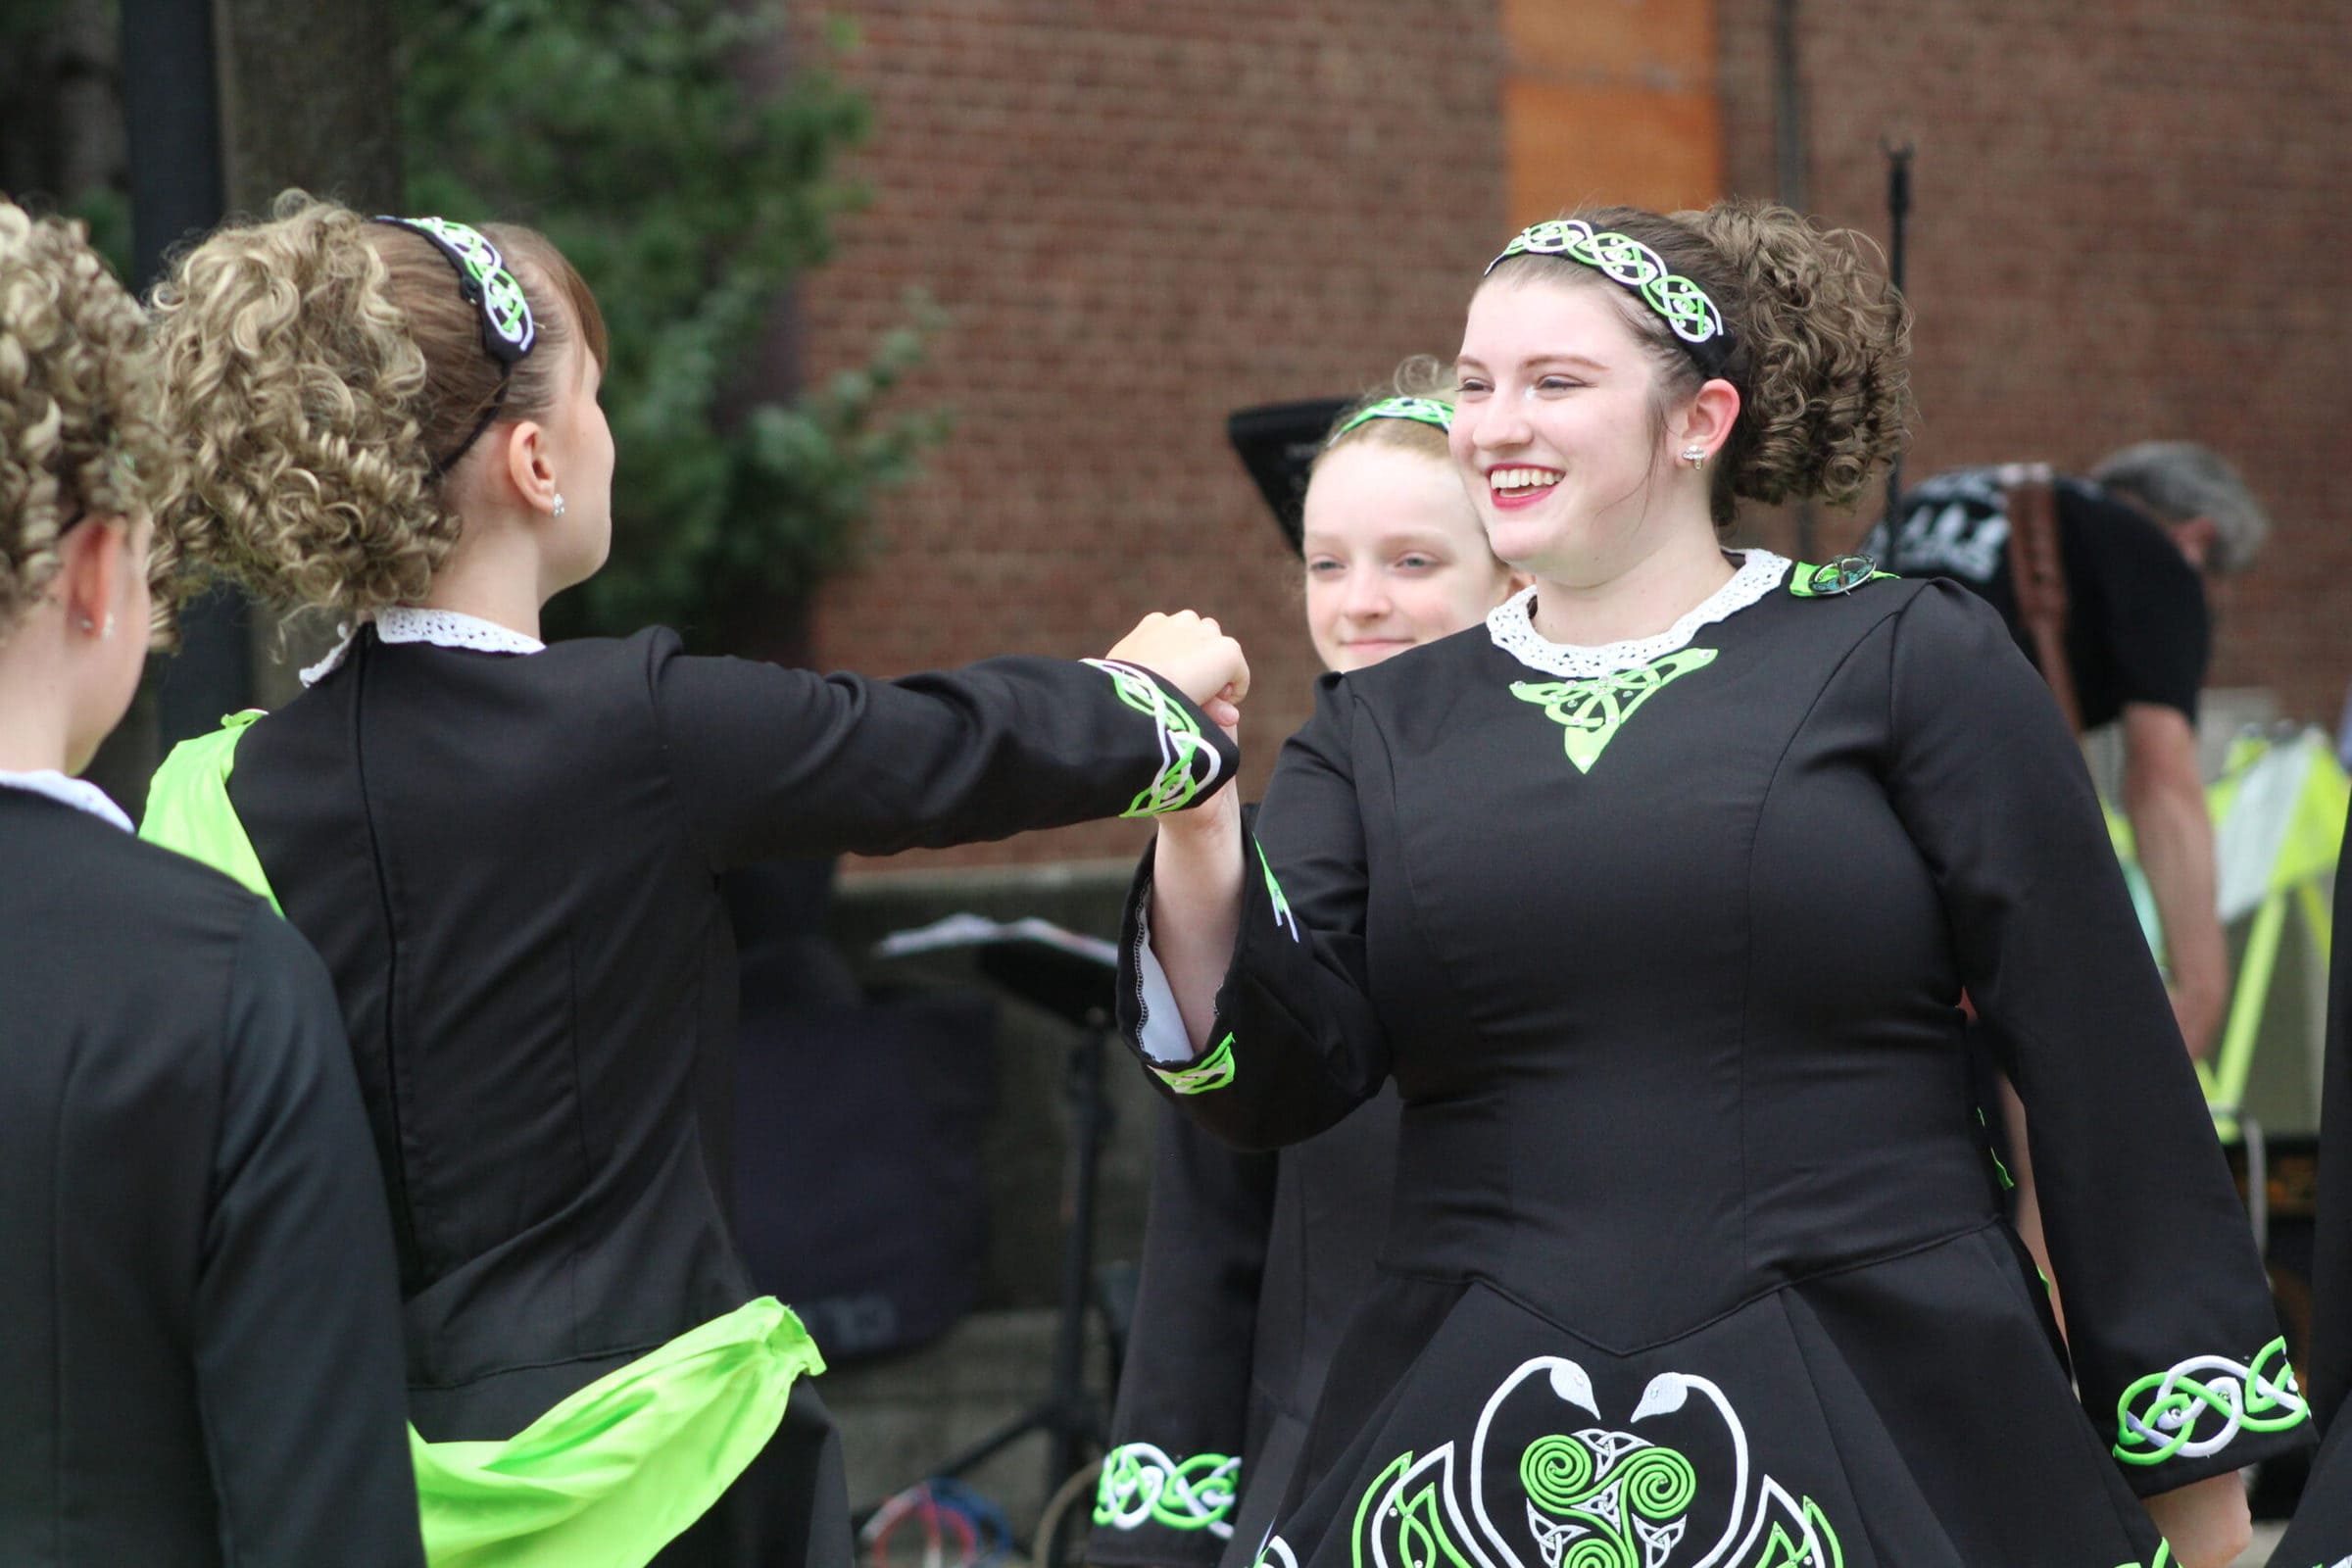 Irish dancers from Jazziak’s Dance School perform during the block party.